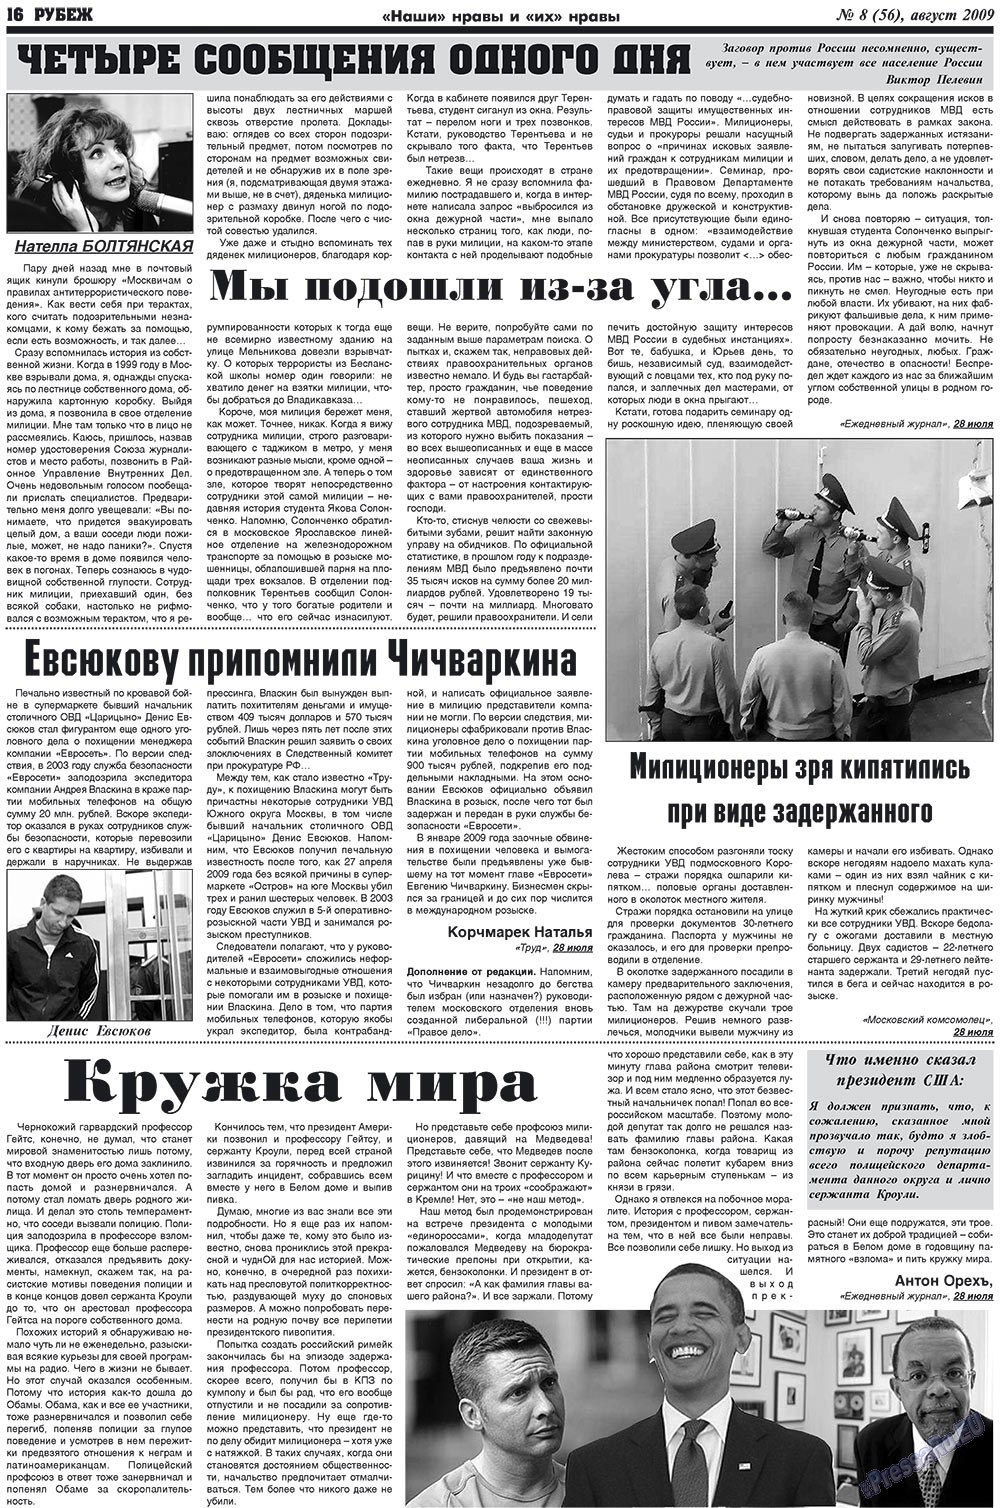 Рубеж, газета. 2009 №8 стр.16